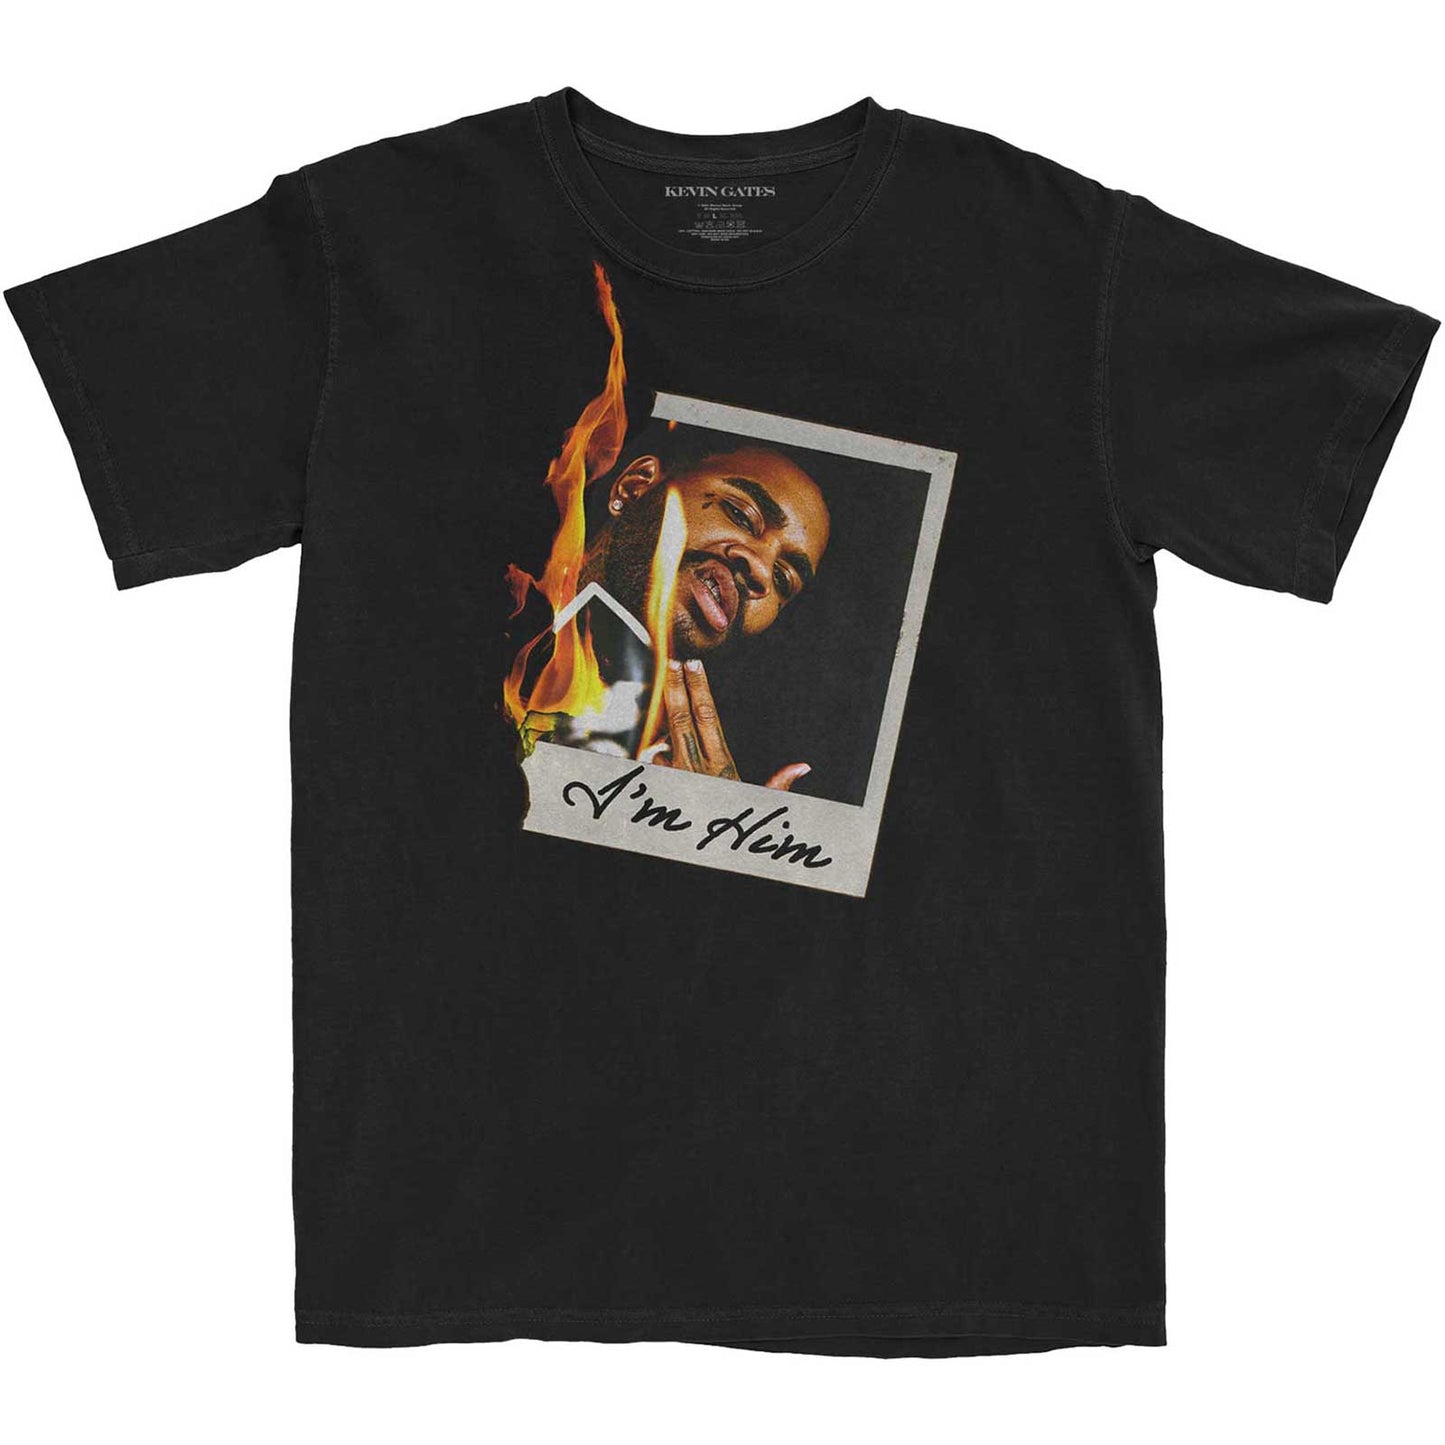 Kevin Gates T-Shirt: Polaroid Flame